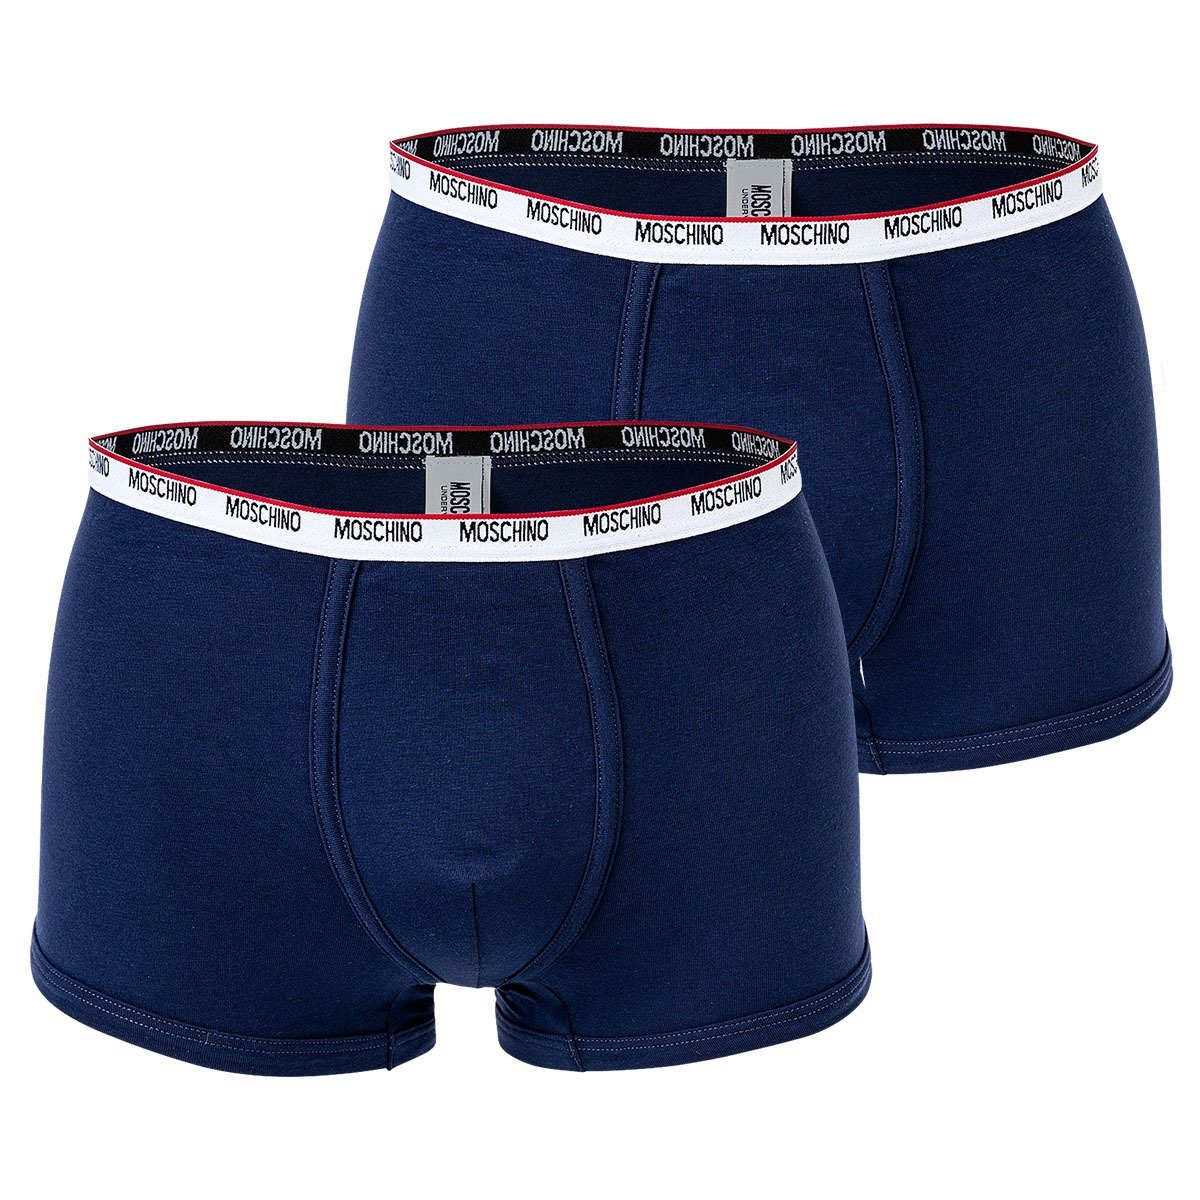 Herren Moschino Blau Boxer Shorts Unterhose, Cotton - 2er Trunks, Pack